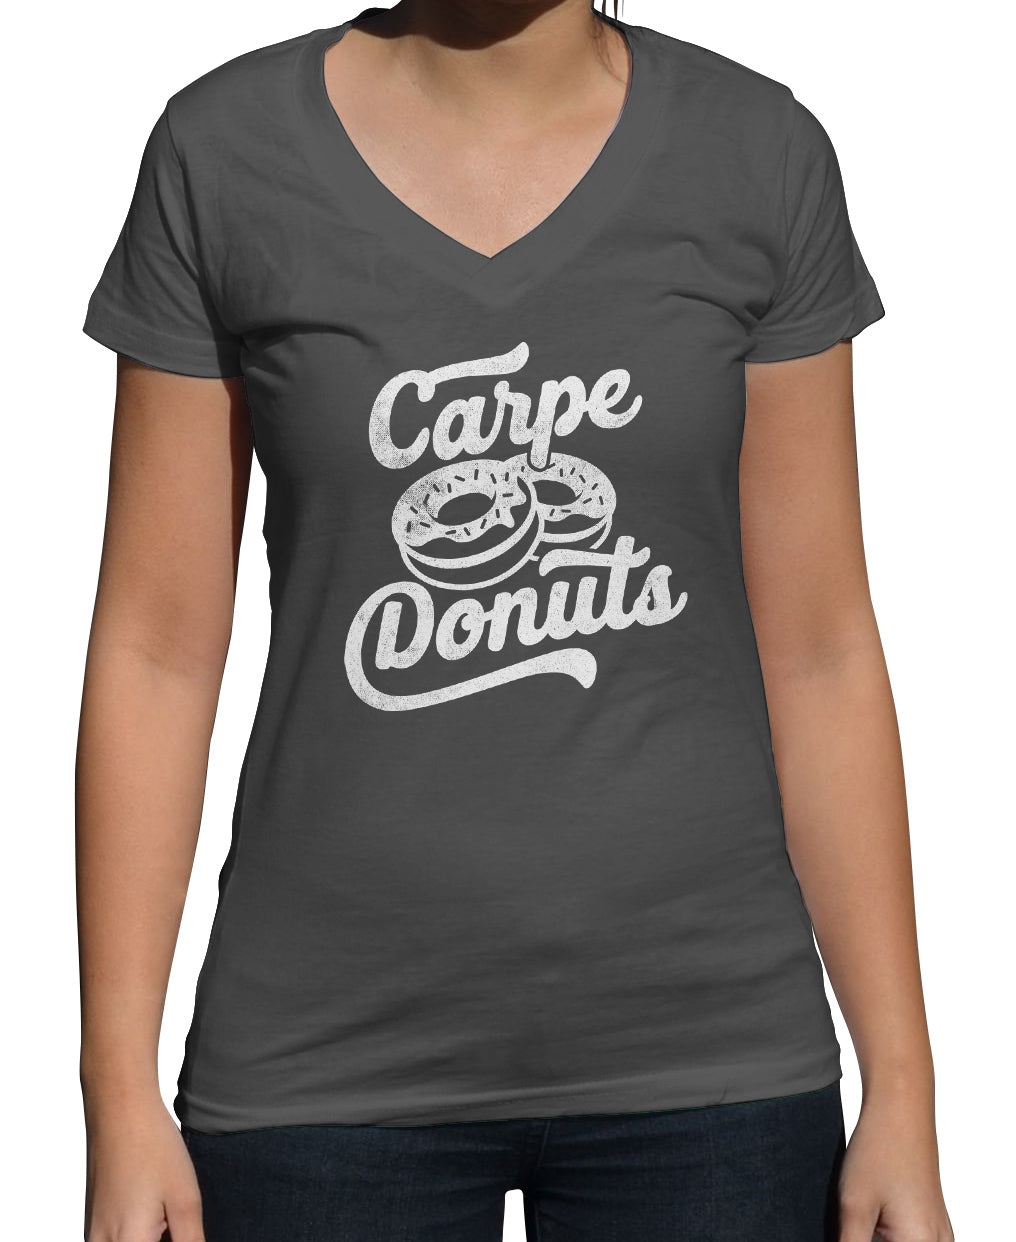 Women's Carpe Donuts Vneck T-Shirt - Funny Donut Shirt